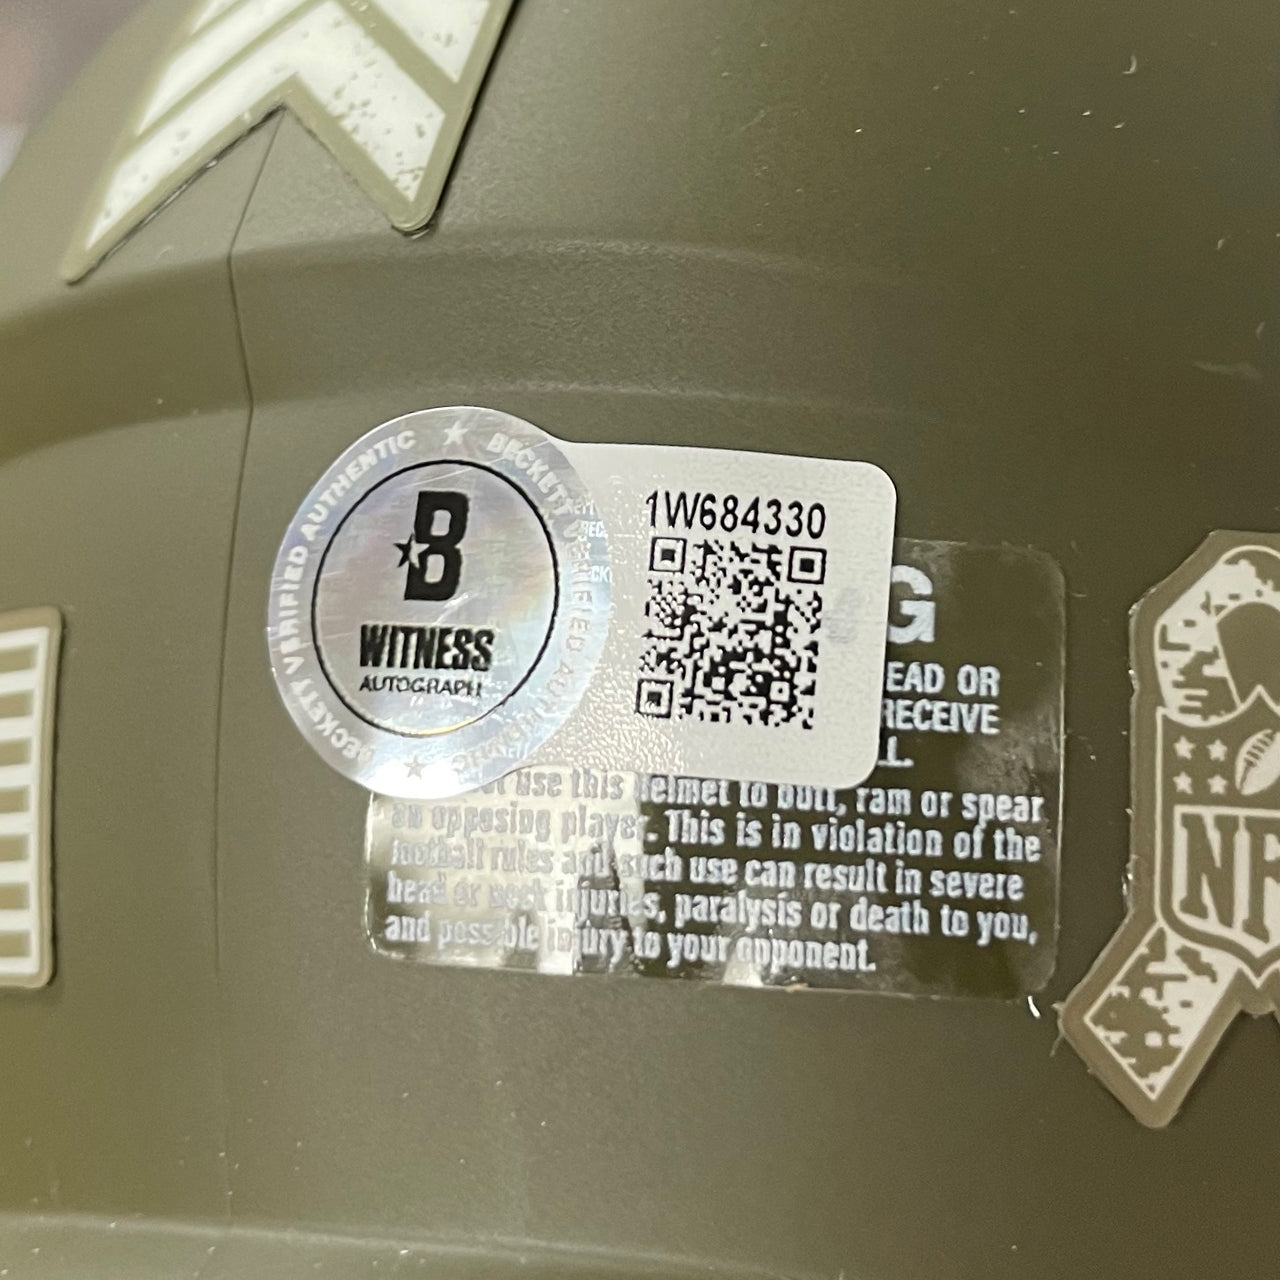 Jerome Bettis Signed Steelers Salute To Service Mini Helmet